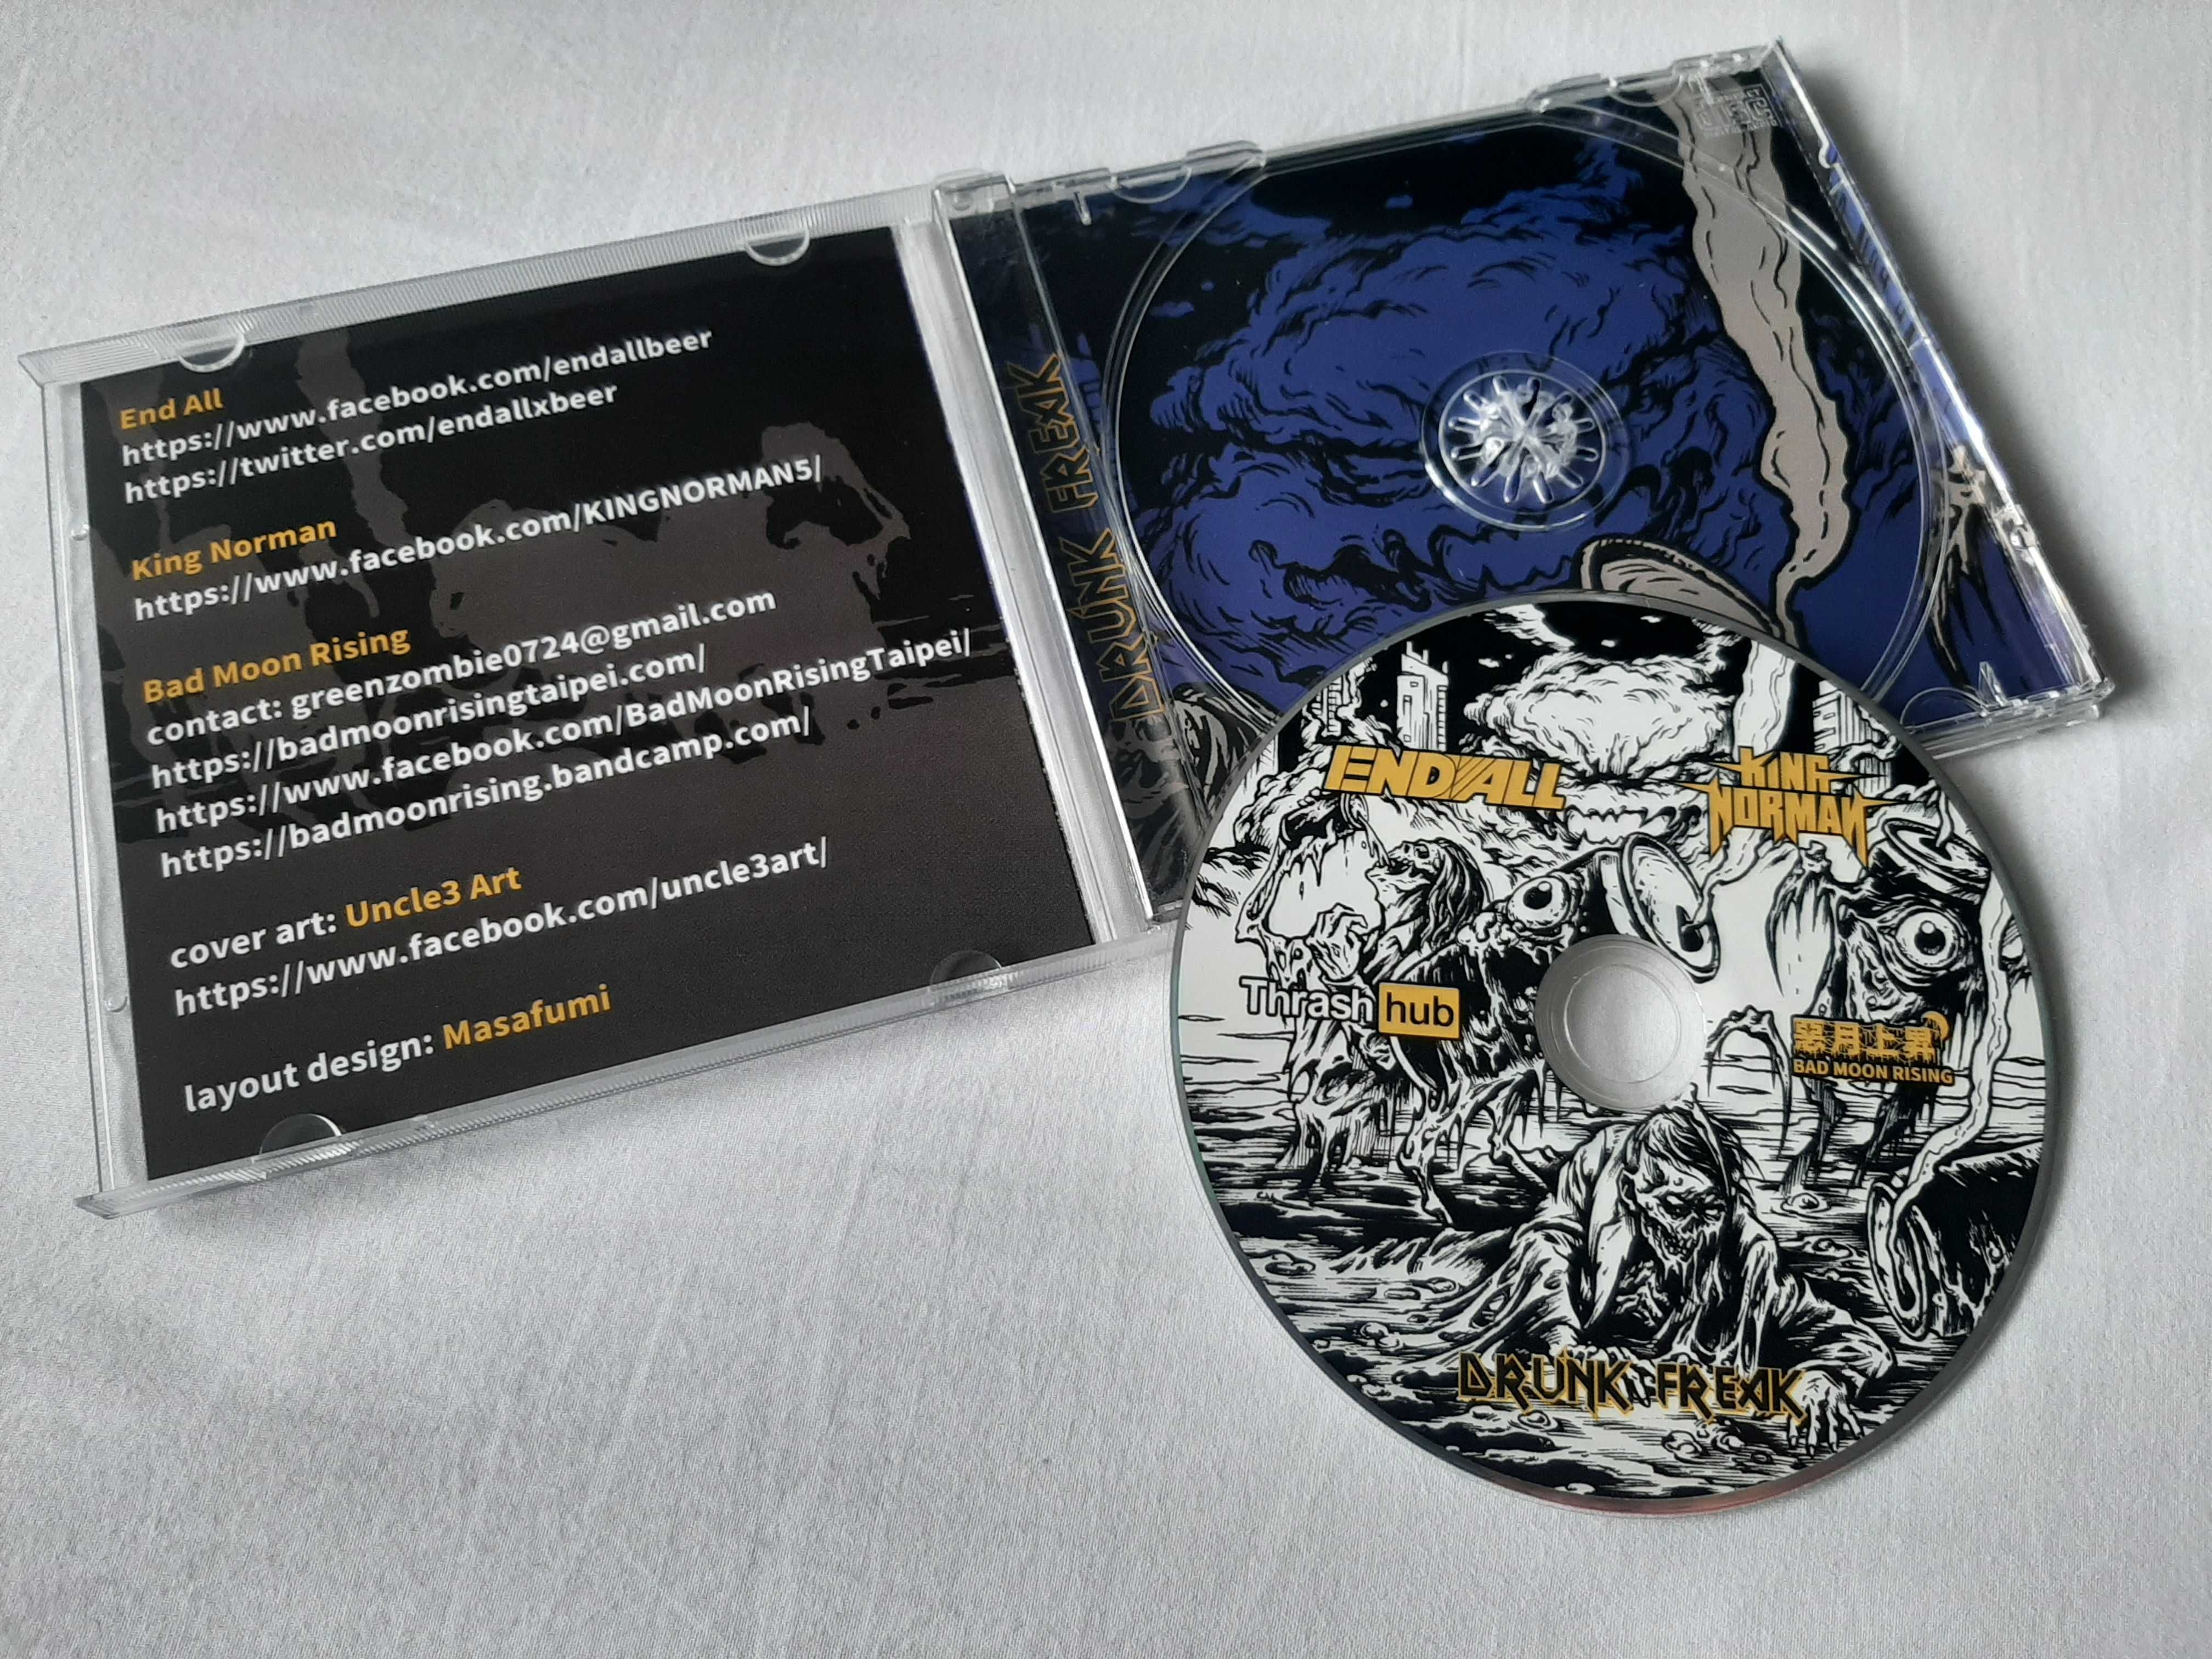 END ALL / KING NORMAN "Drunk Freak" split CD 2020 thrash metal Azja